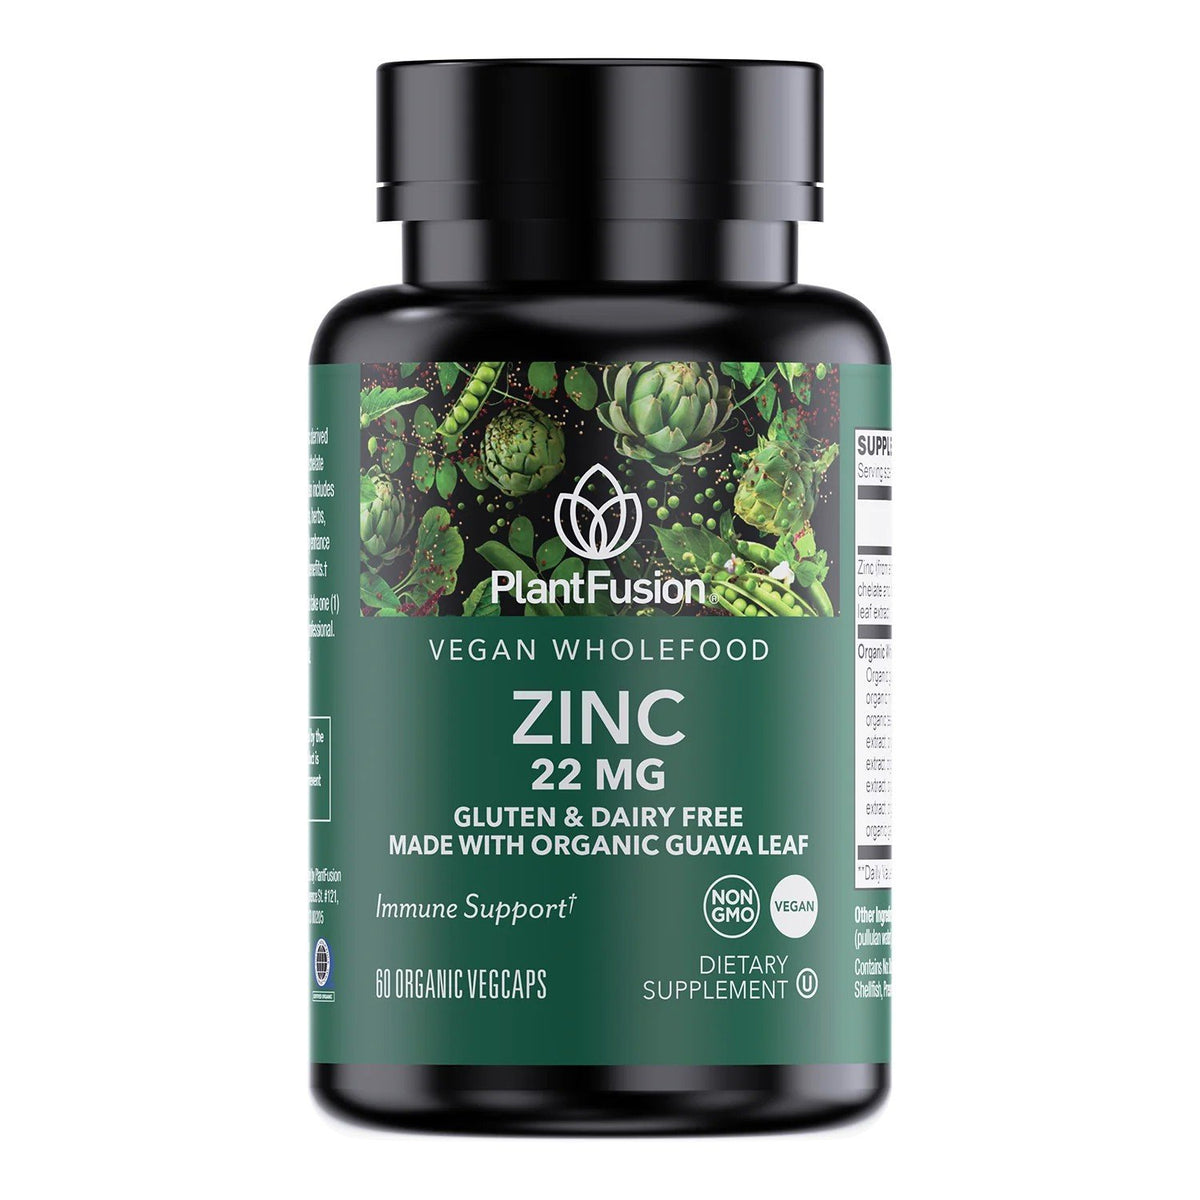 PlantFusion Vegan Wholefood Zinc 22 mg 60 VegCap